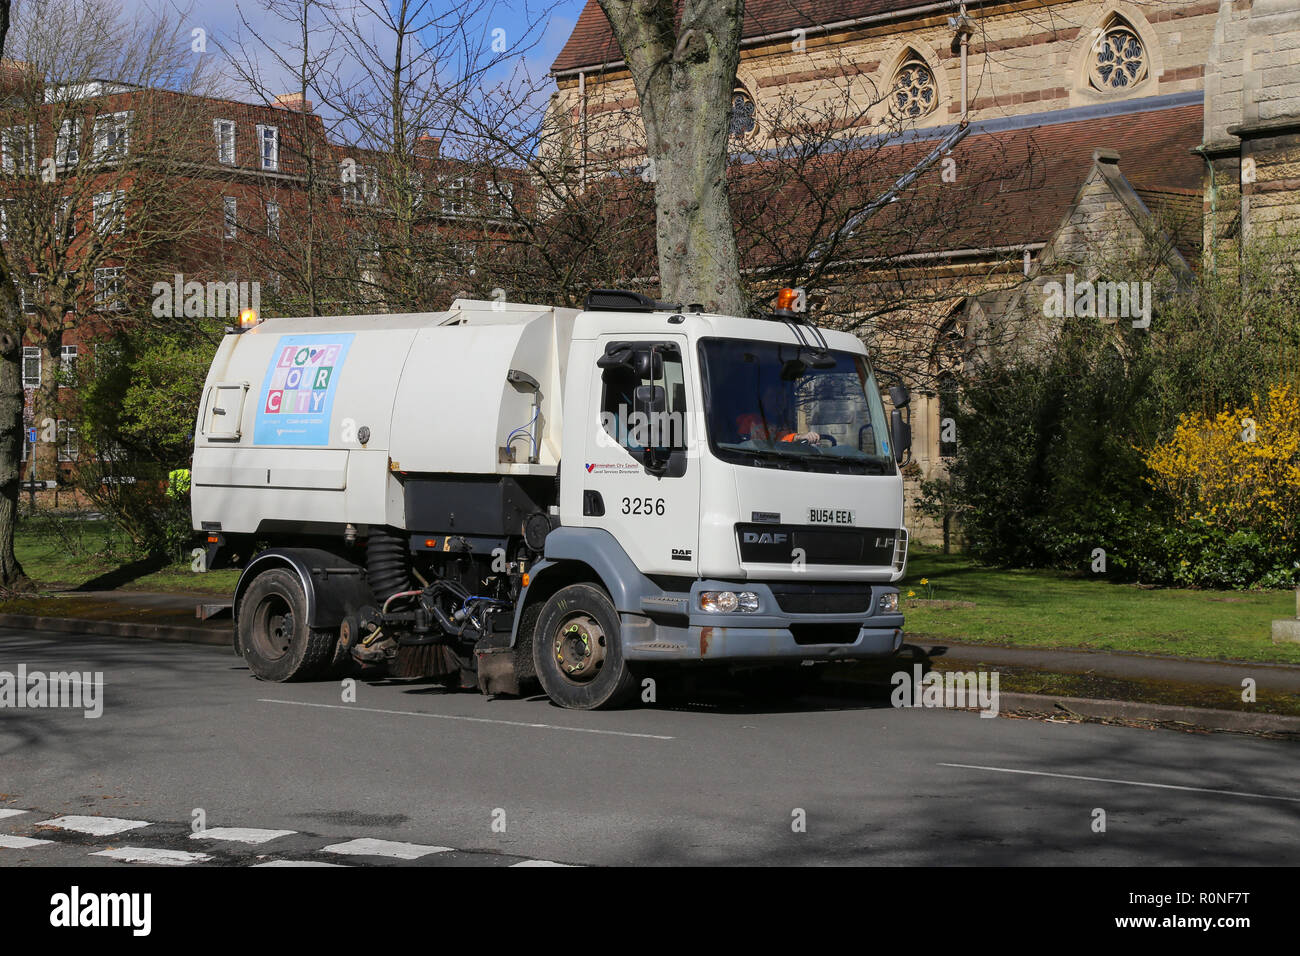 A DAF LF road sweeping vehicle belonging to Birmingham City Council, England, United Kingdom. Stock Photo